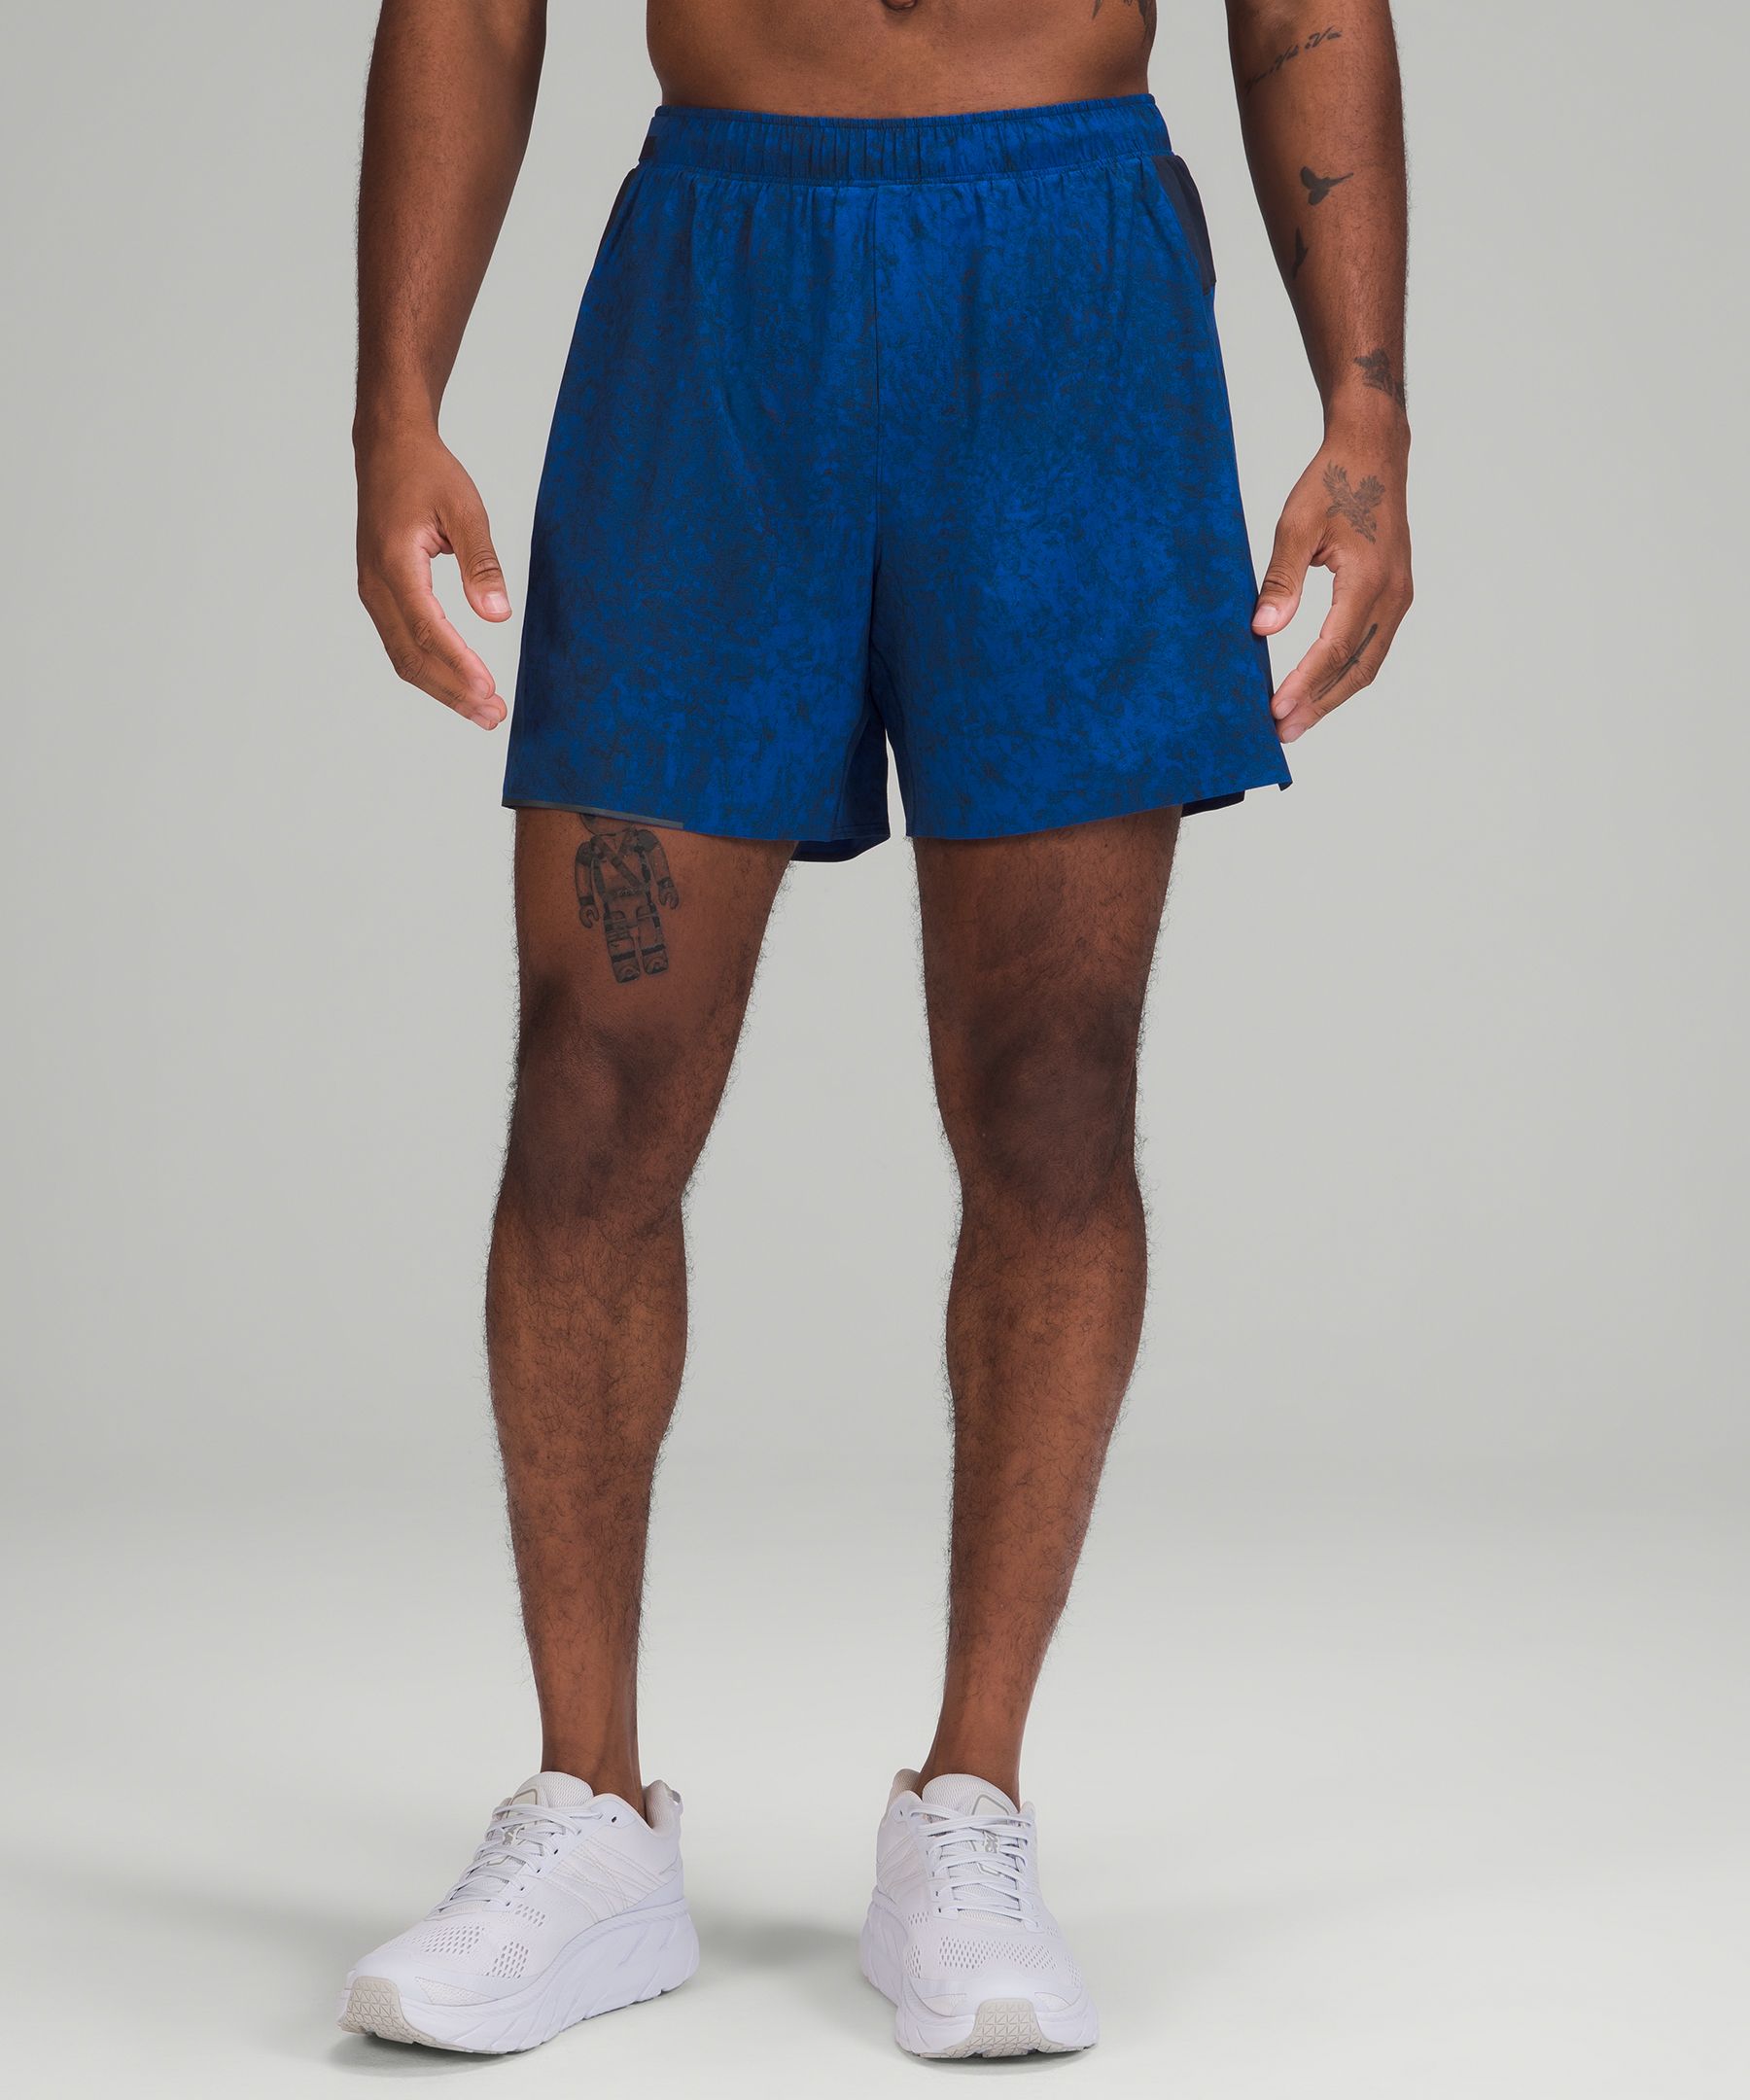 Lululemon Surge Lined Shorts 6" In Blue